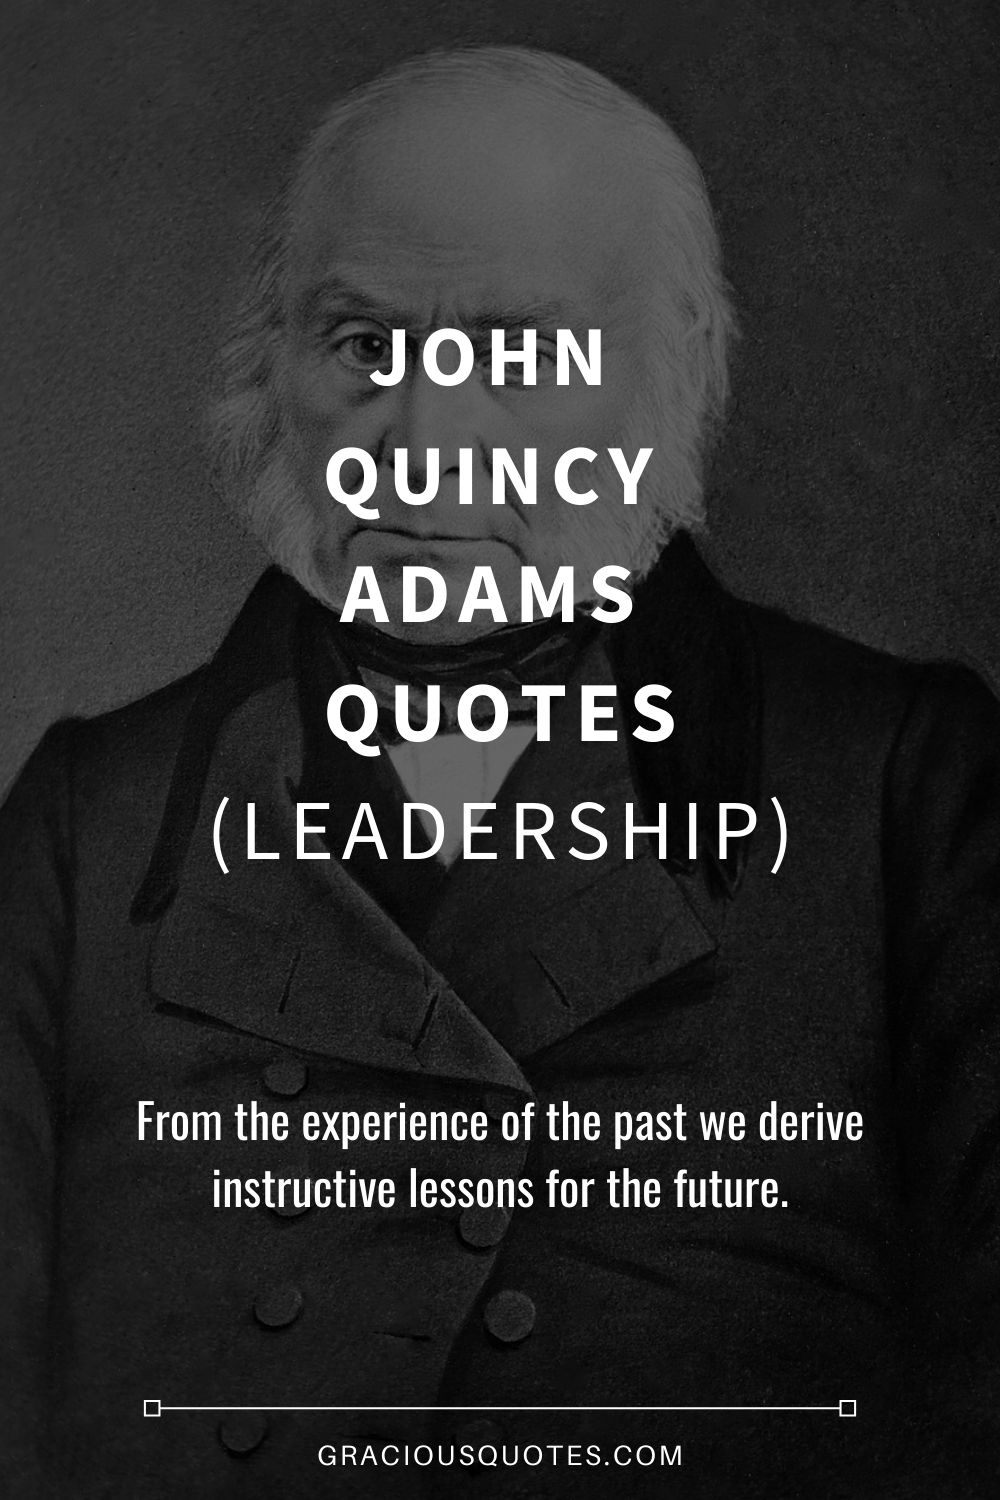 John Quincy Adams Quotes (LEADERSHIP) - Gracious Quotes